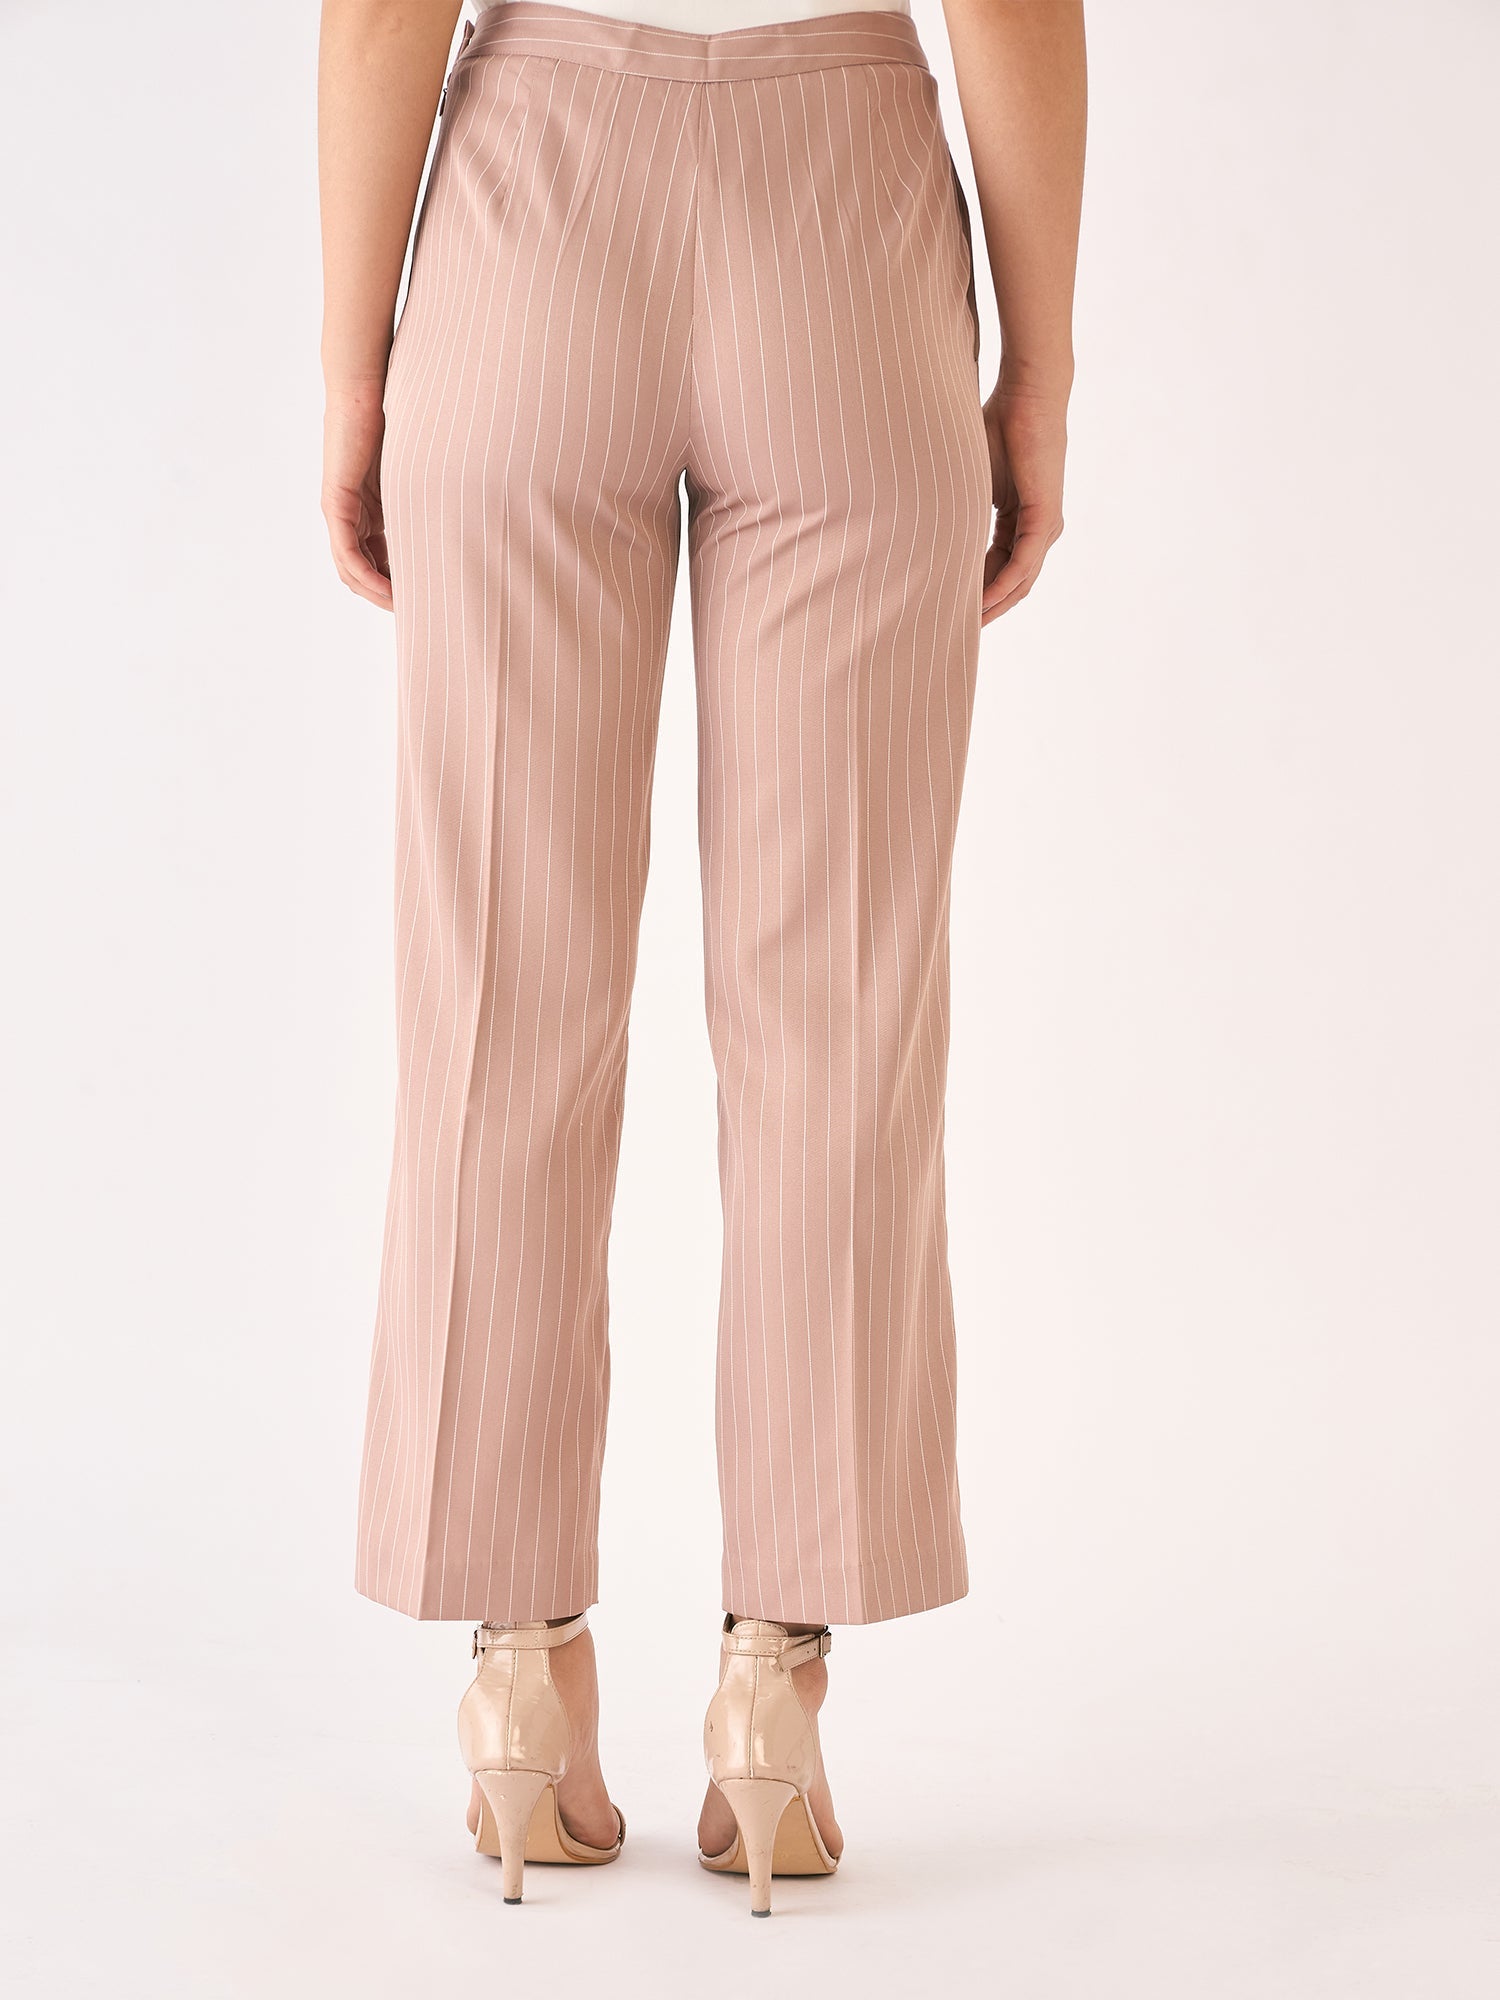 Liberal Striped Formal Side Zip Pant-Cedar/White